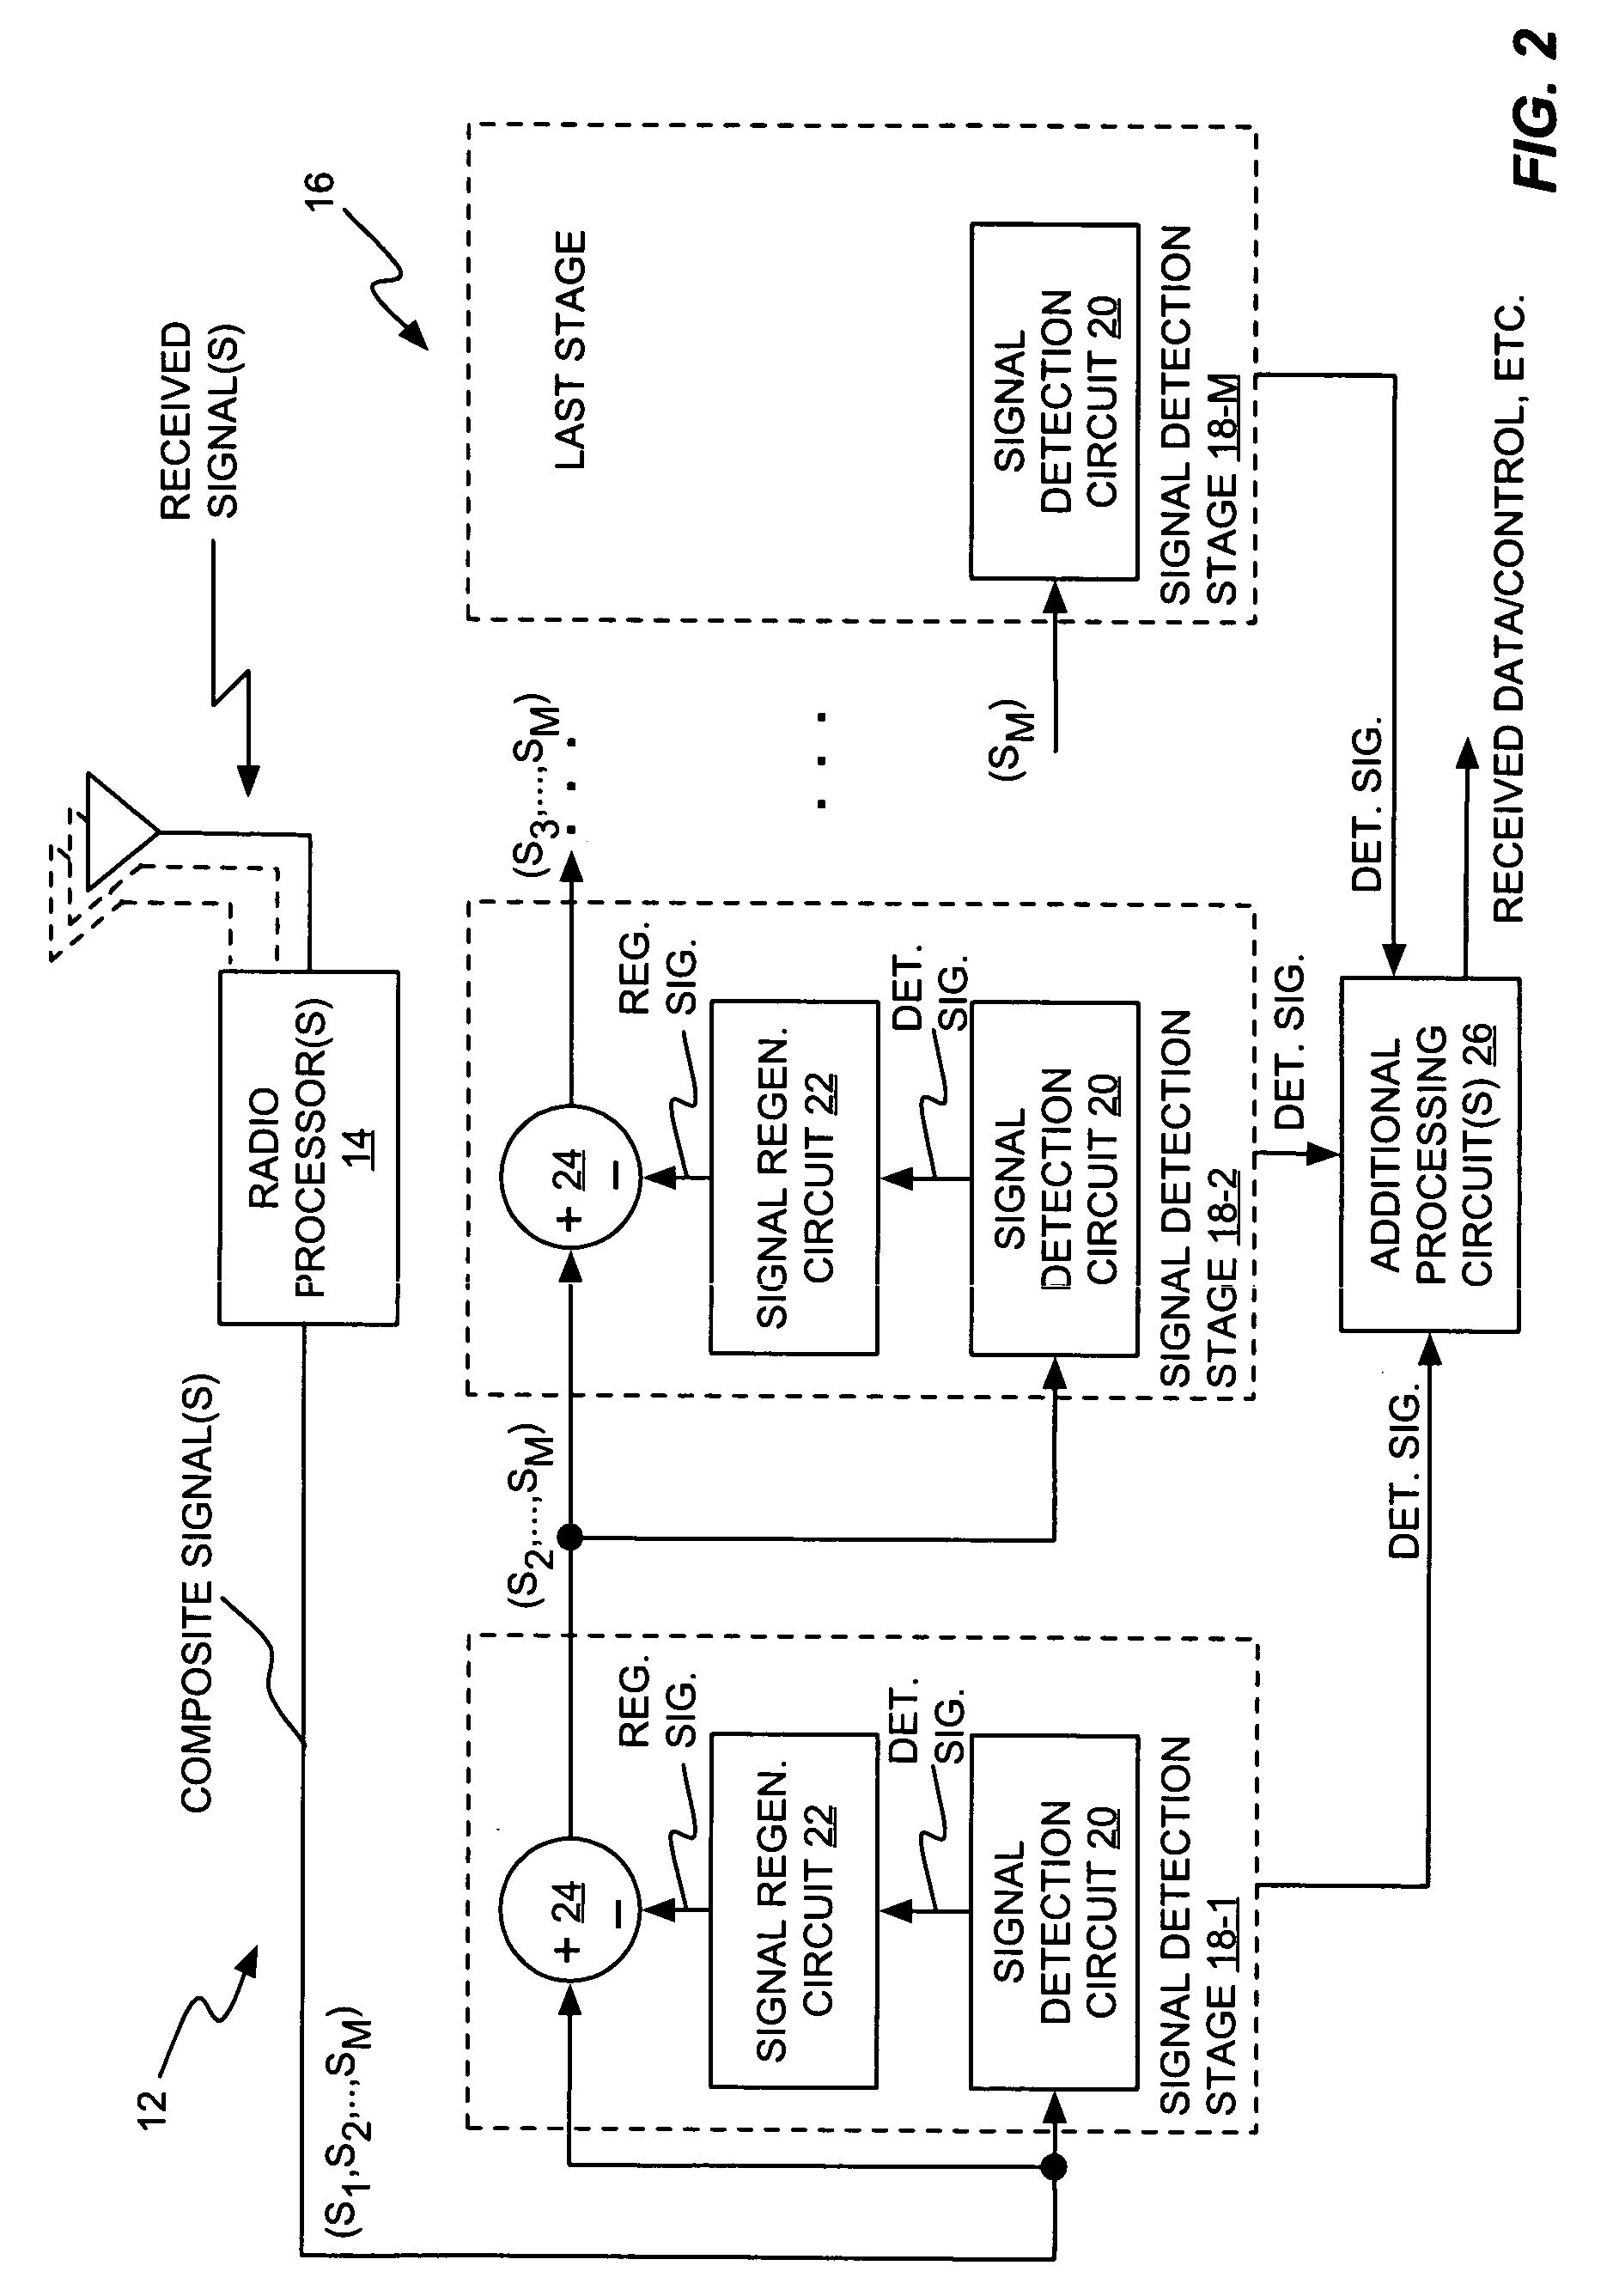 Successive interference cancellation in a generalized RAKE receiver architecture